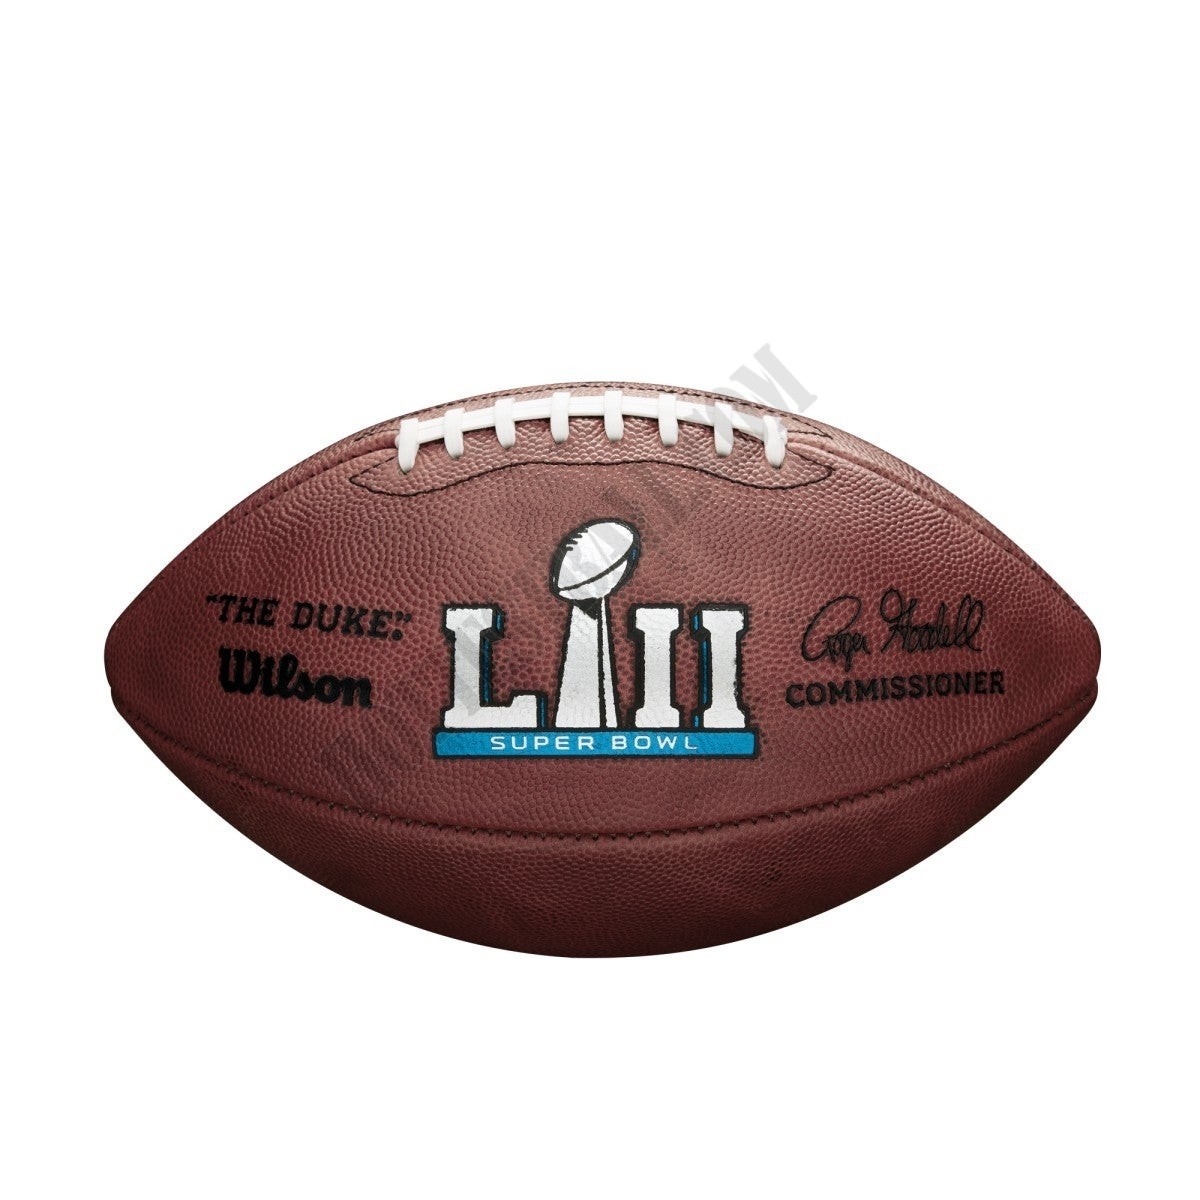 Super Bowl LII Game Football - Philadelphia Eagles - Wilson Discount Store - Super Bowl LII Game Football - Philadelphia Eagles - Wilson Discount Store